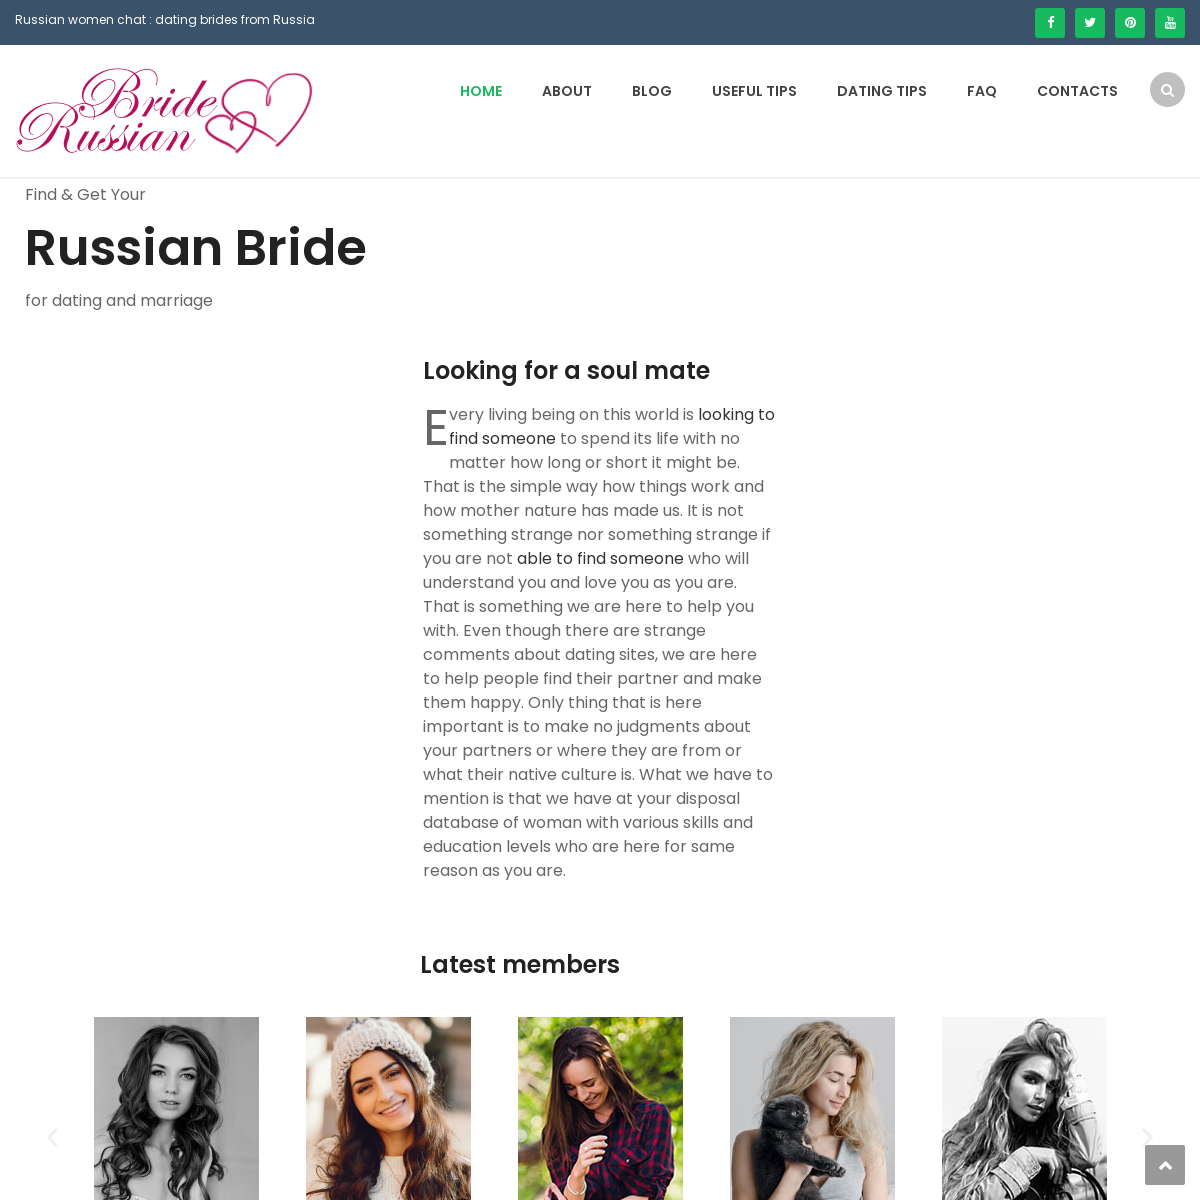 A complete backup of bride-russian.com